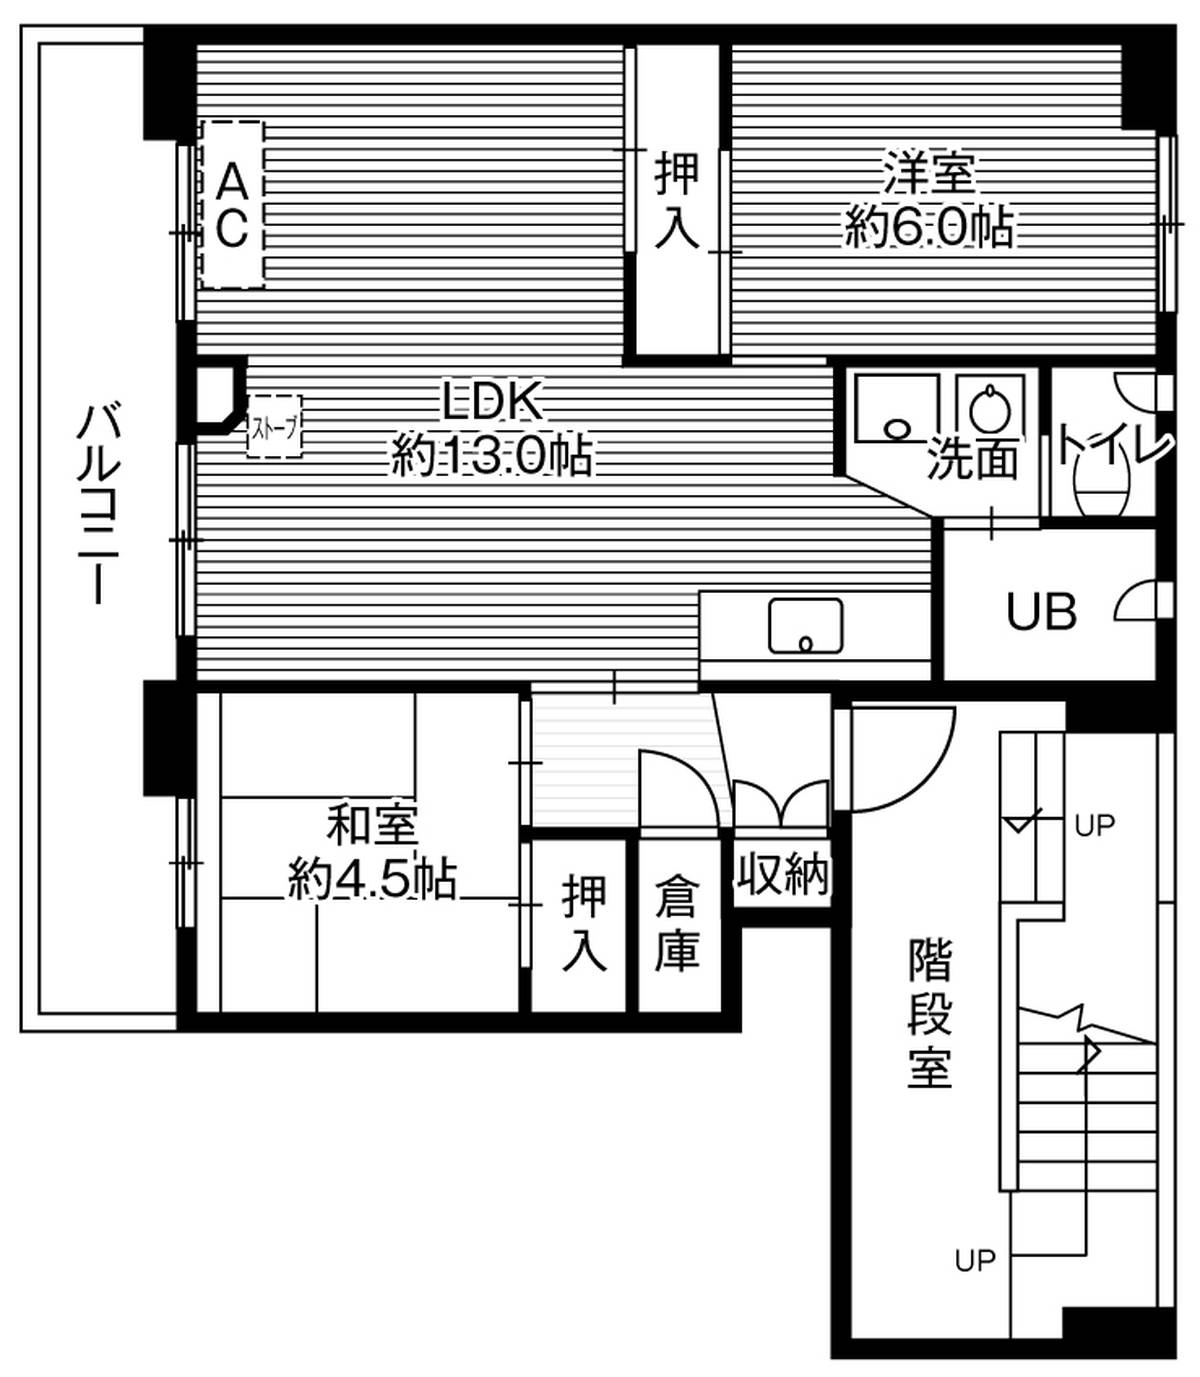 3DK floorplan of Village House Yakumo in Futami-gun